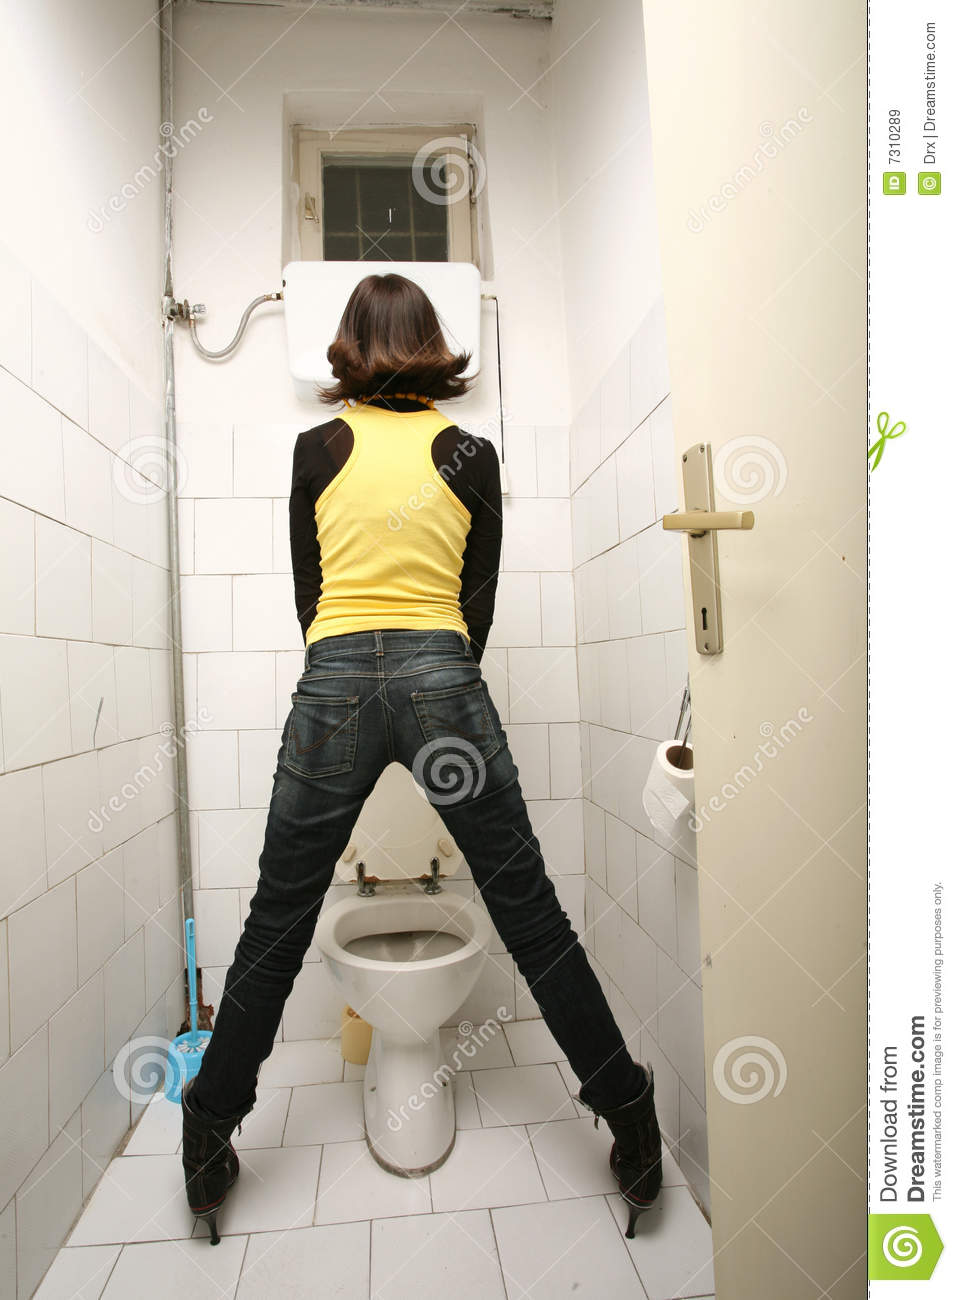 best of Bathroom peeing pictures the Women in